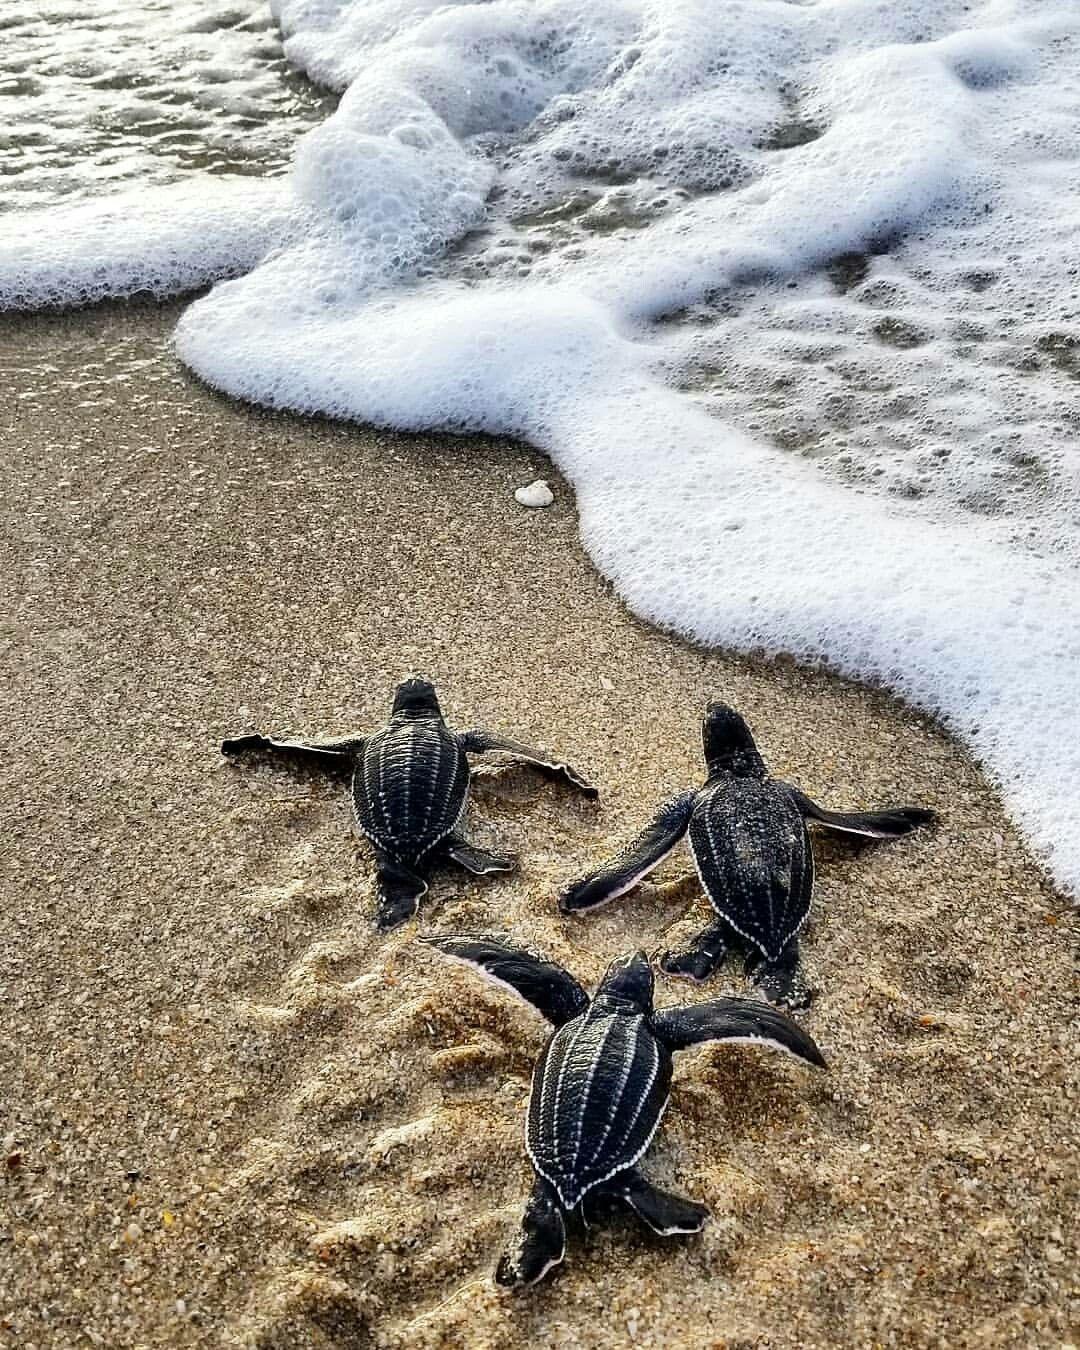 Three baby sea turtles crawling on the beach - Sea turtle